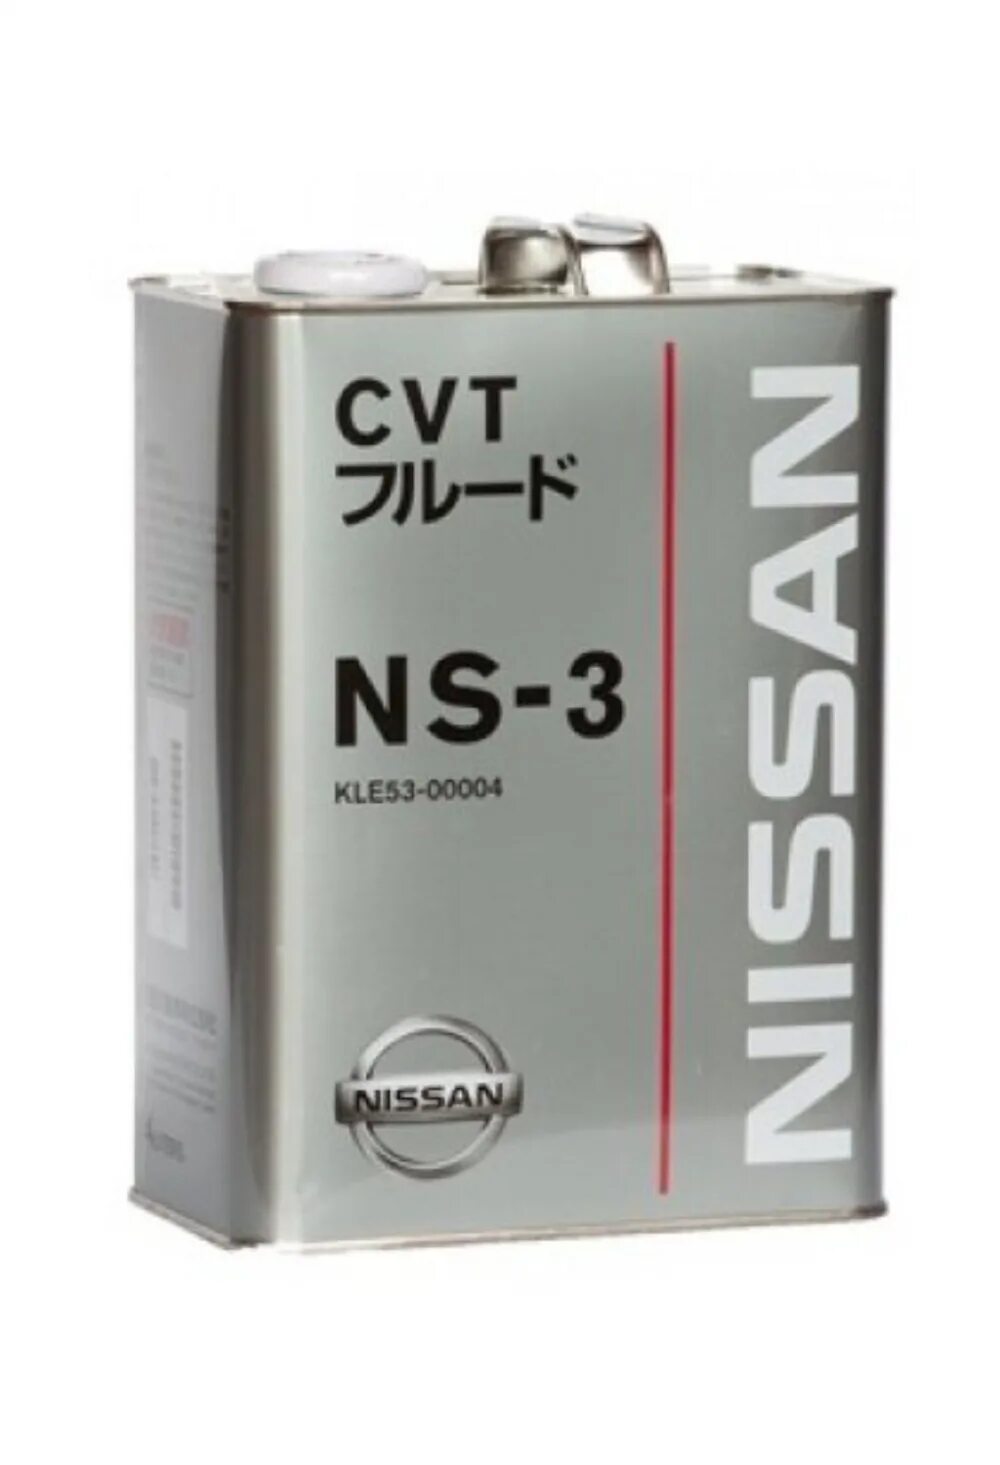 Nissan CVT NS-3 4л. Kle53-00004. Nissan NS-3 CVT Fluid. Масло Ниссан CVT NS-3. Масло NS-3 CVT для Ниссан артикул.